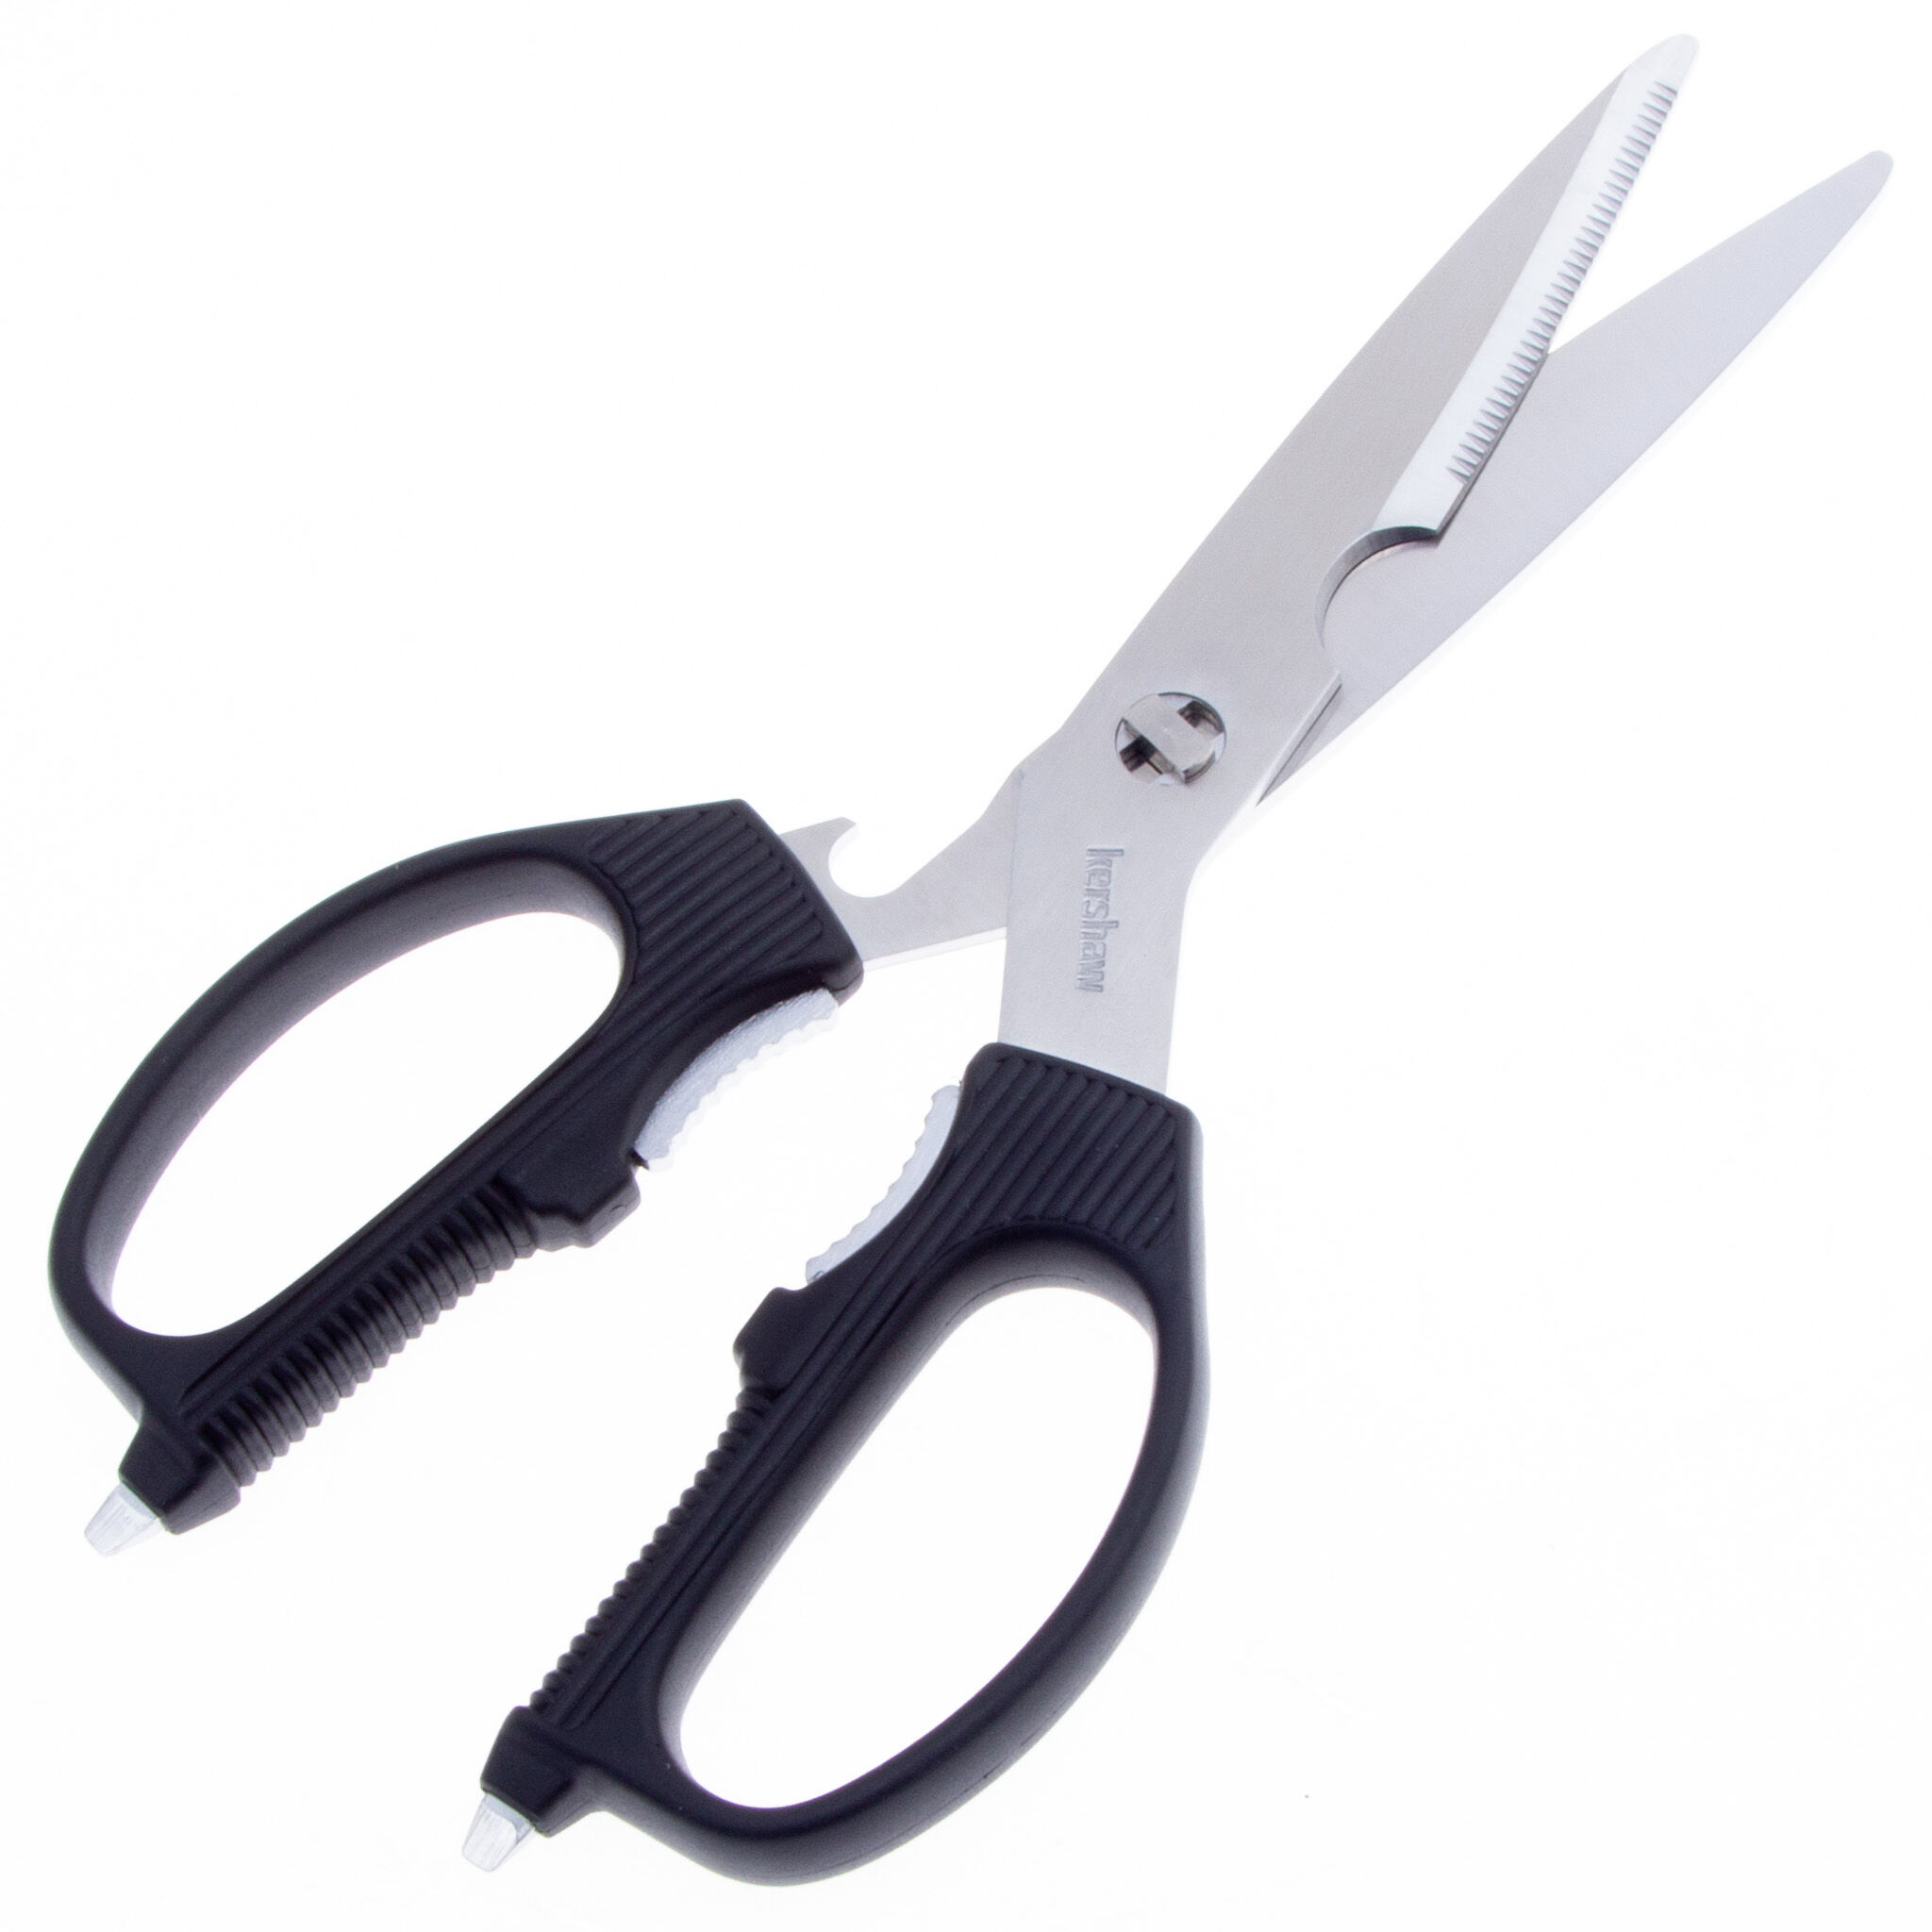 Kershaw Taskmaster 1121 scissors